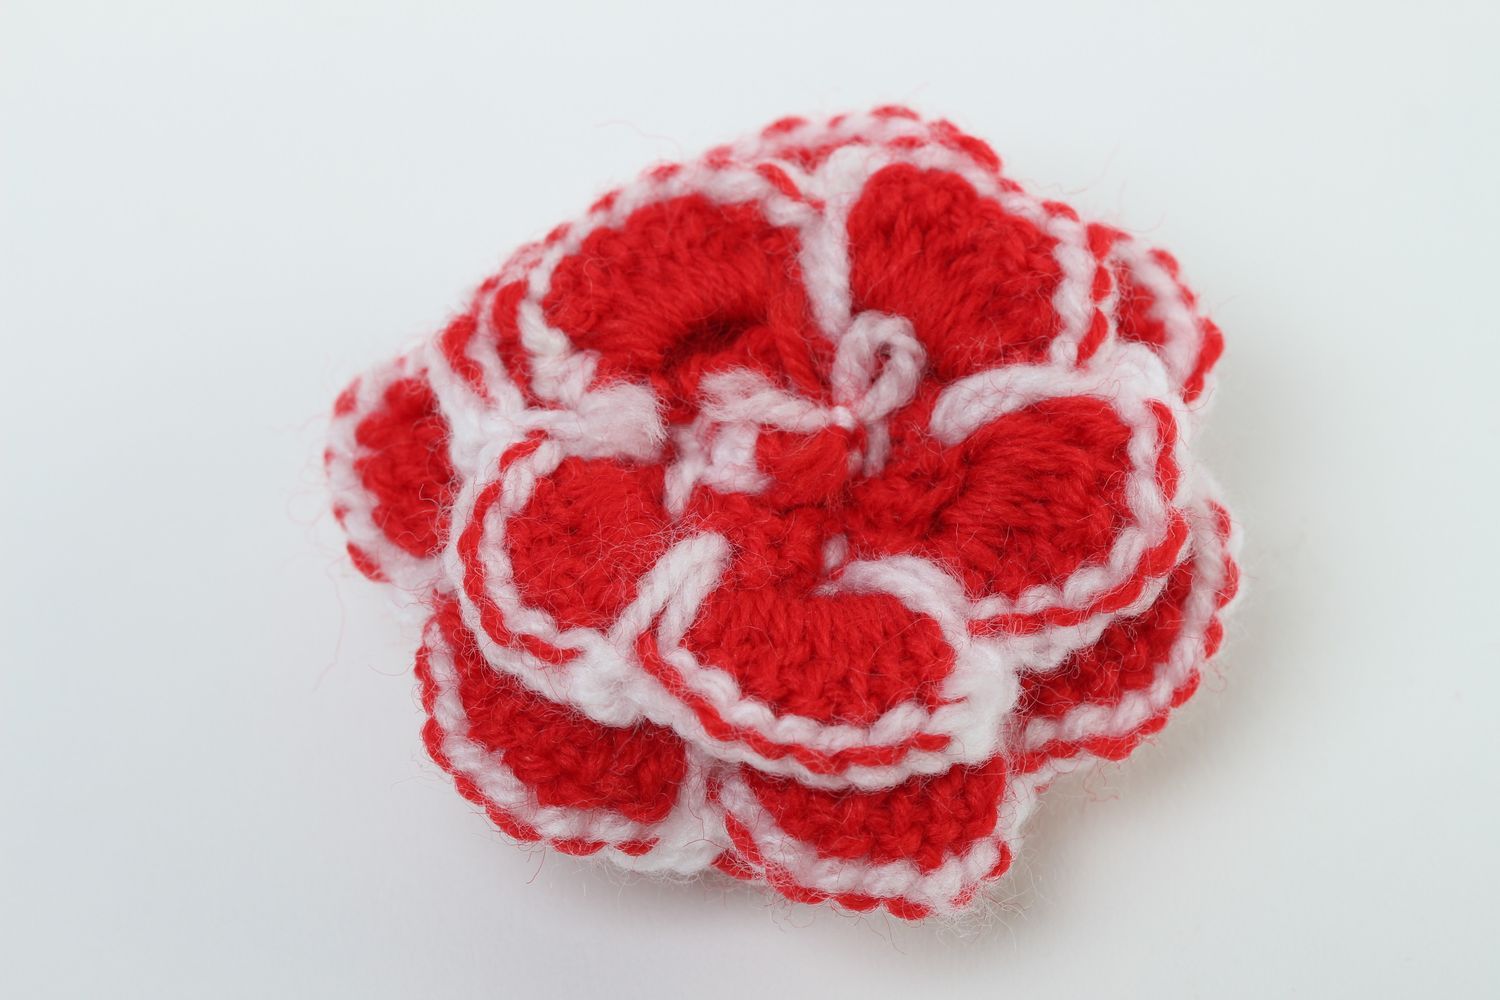 Handmade crocheted flower crochet roses decorative flower jewelry supplies photo 4